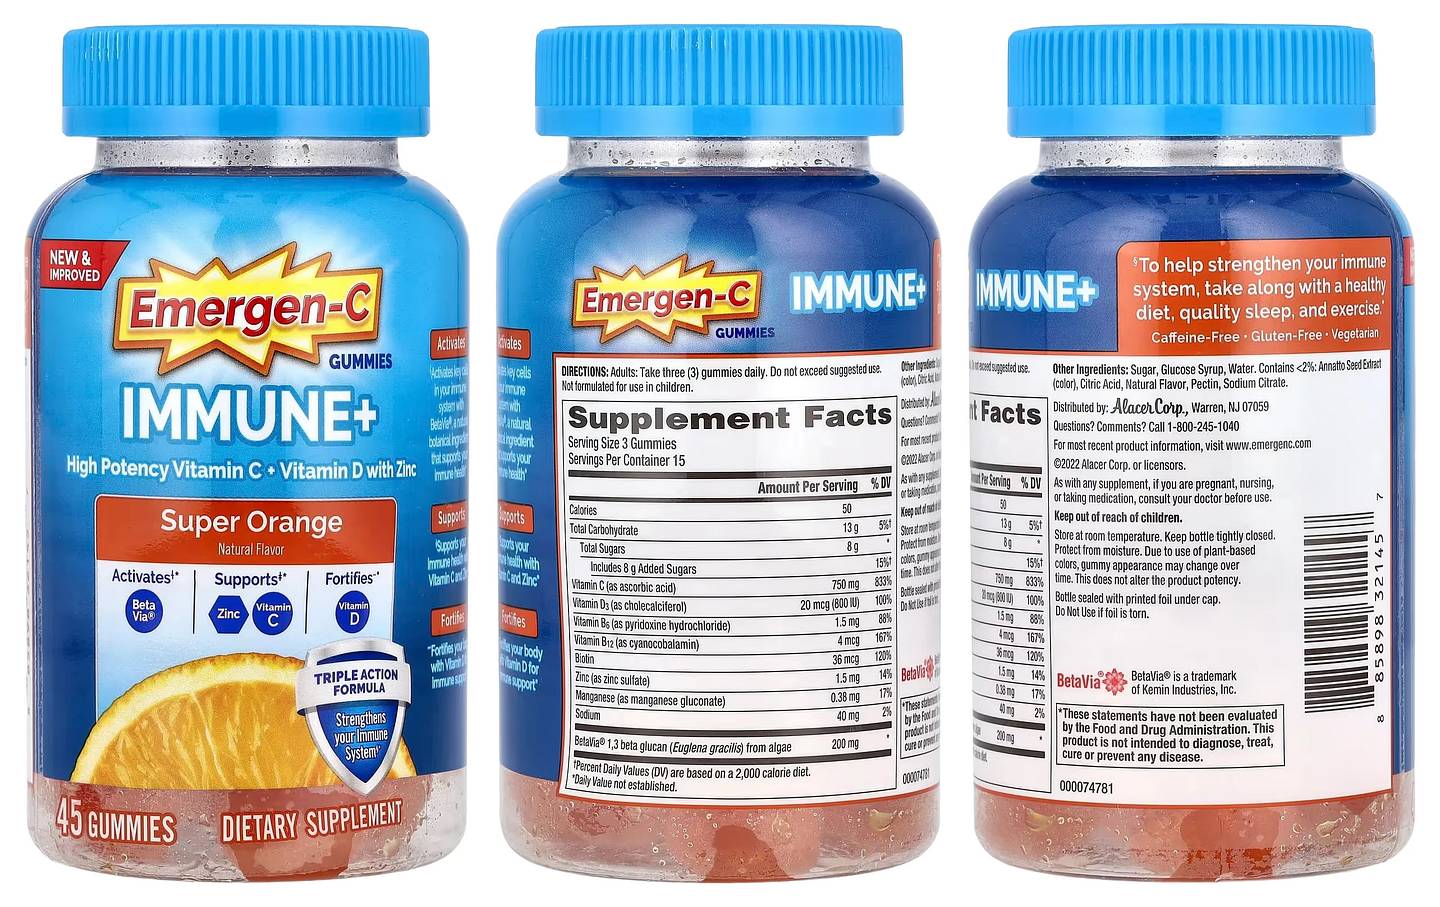 Emergen-C, Immune+ Gummies packaging